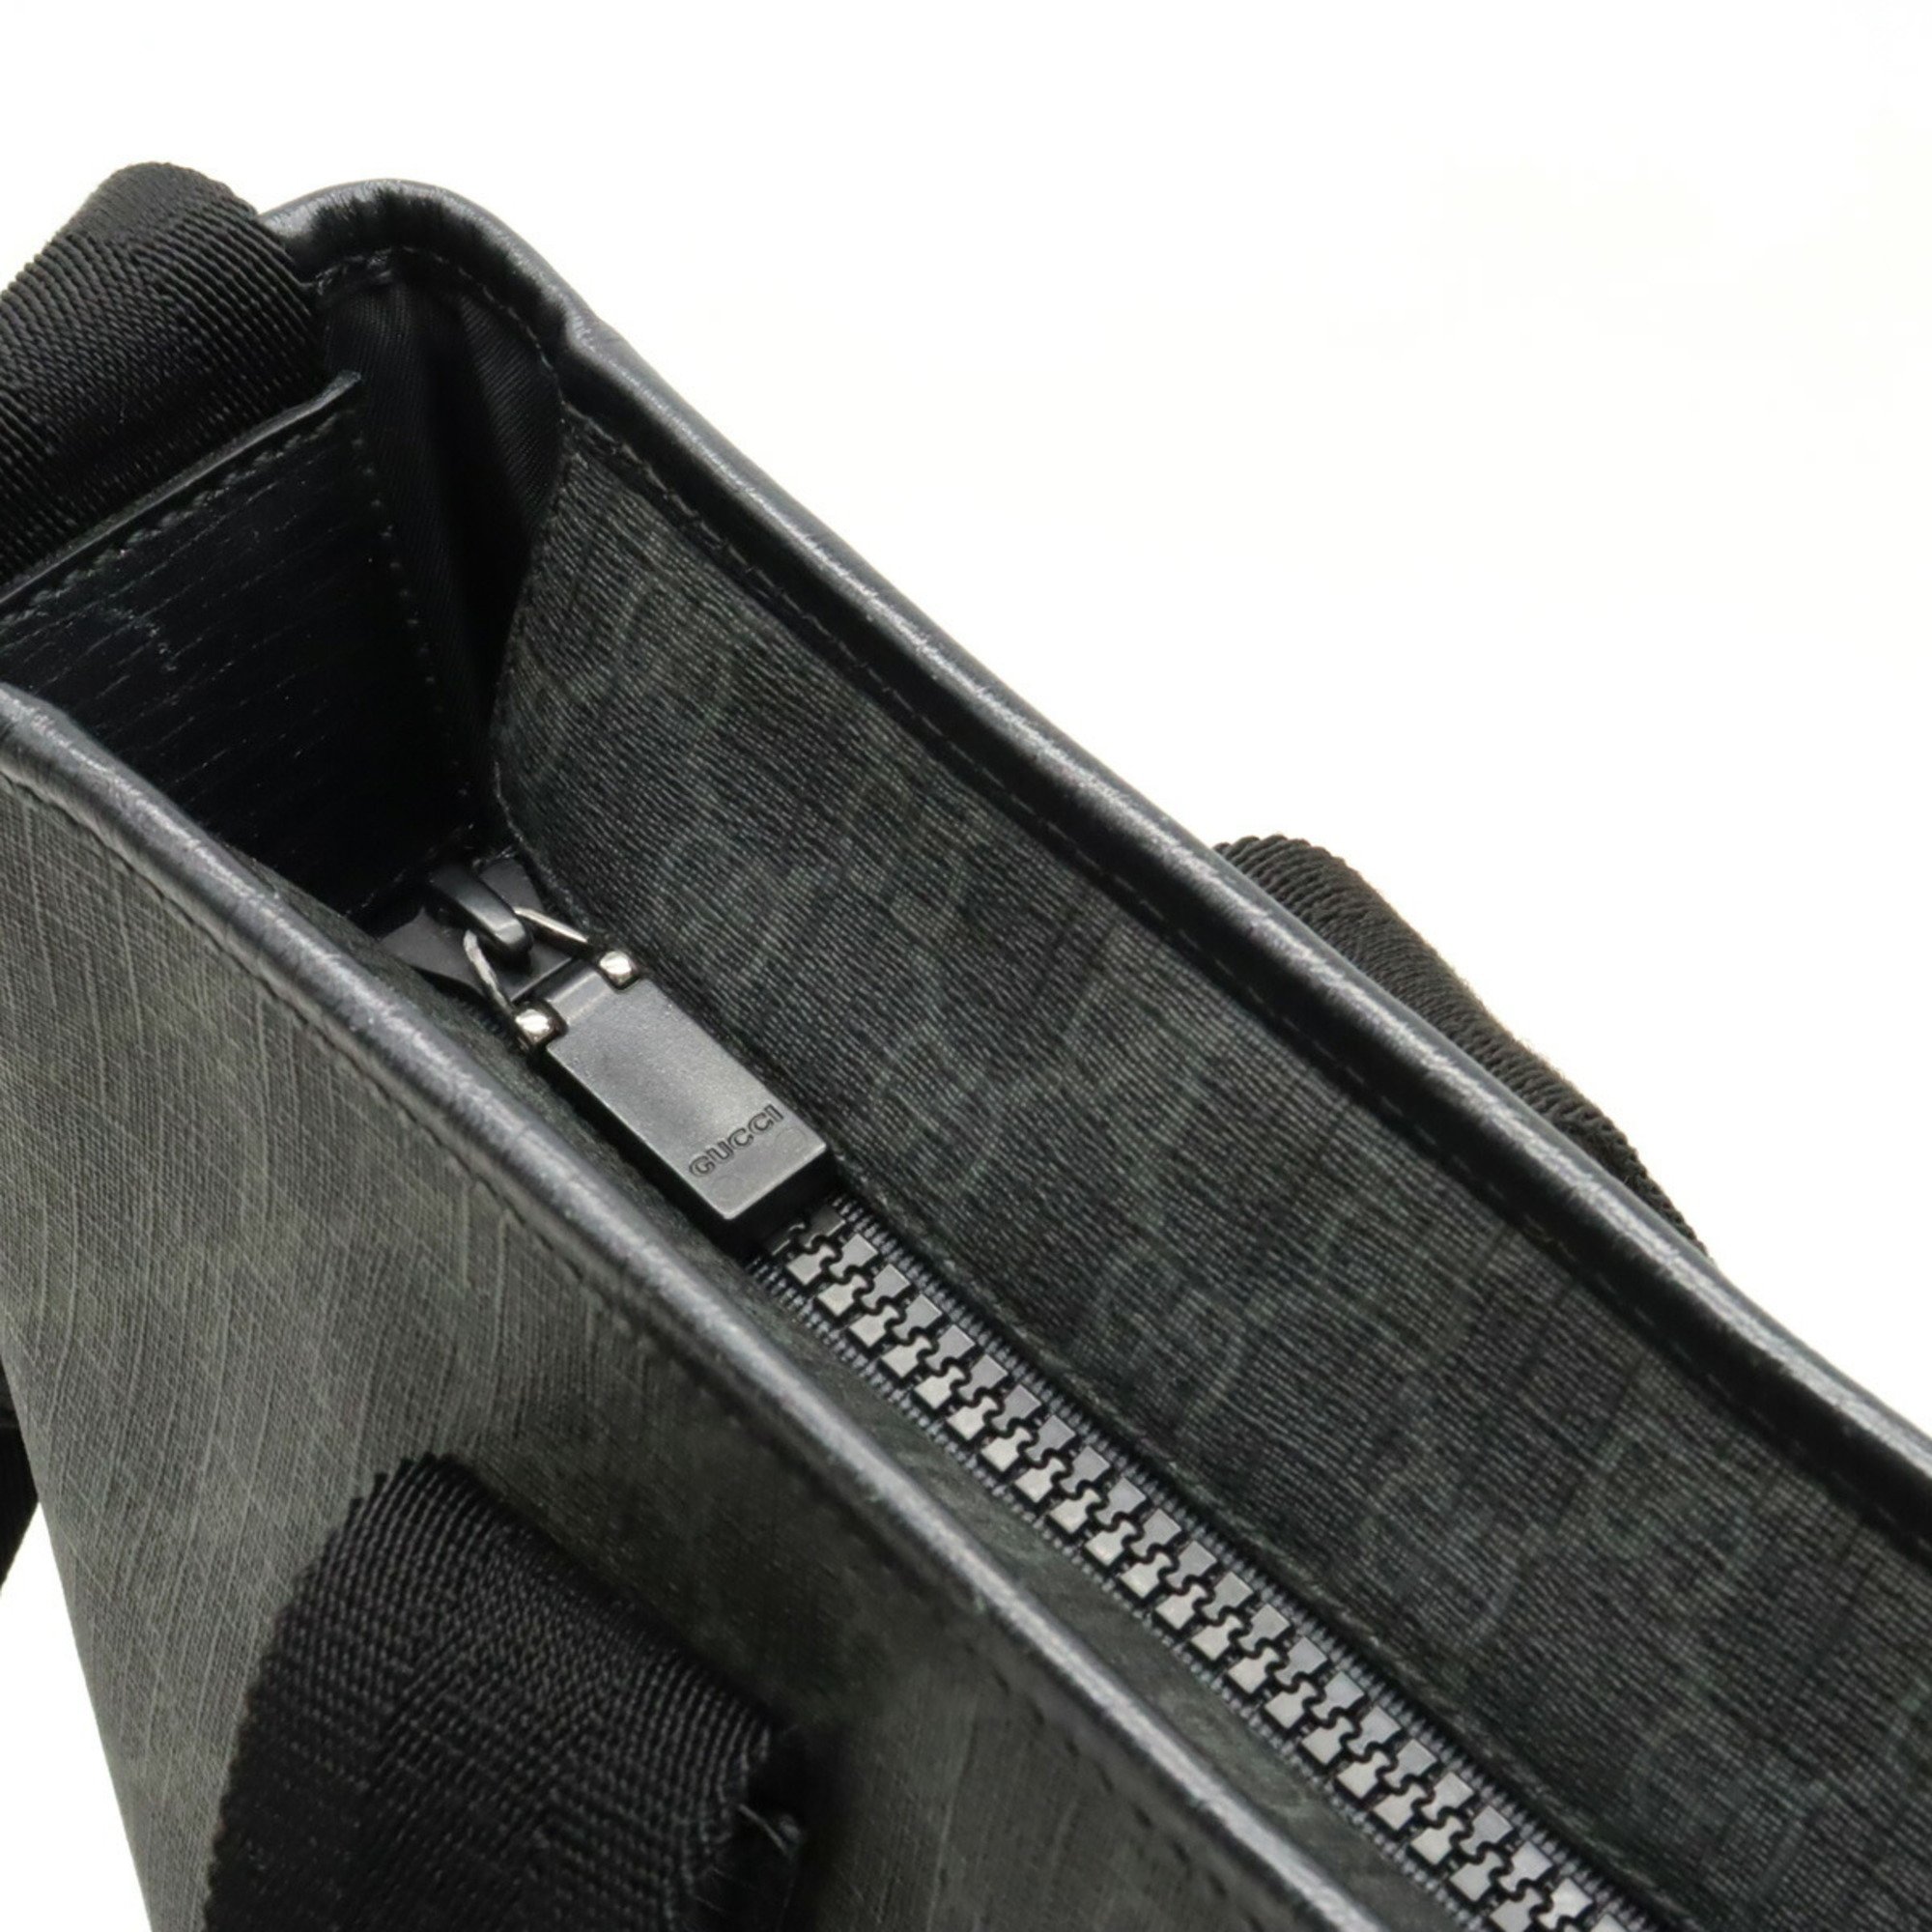 GUCCI GG Supreme Tote Bag Shoulder PVC Leather Dark Gray Black 162163